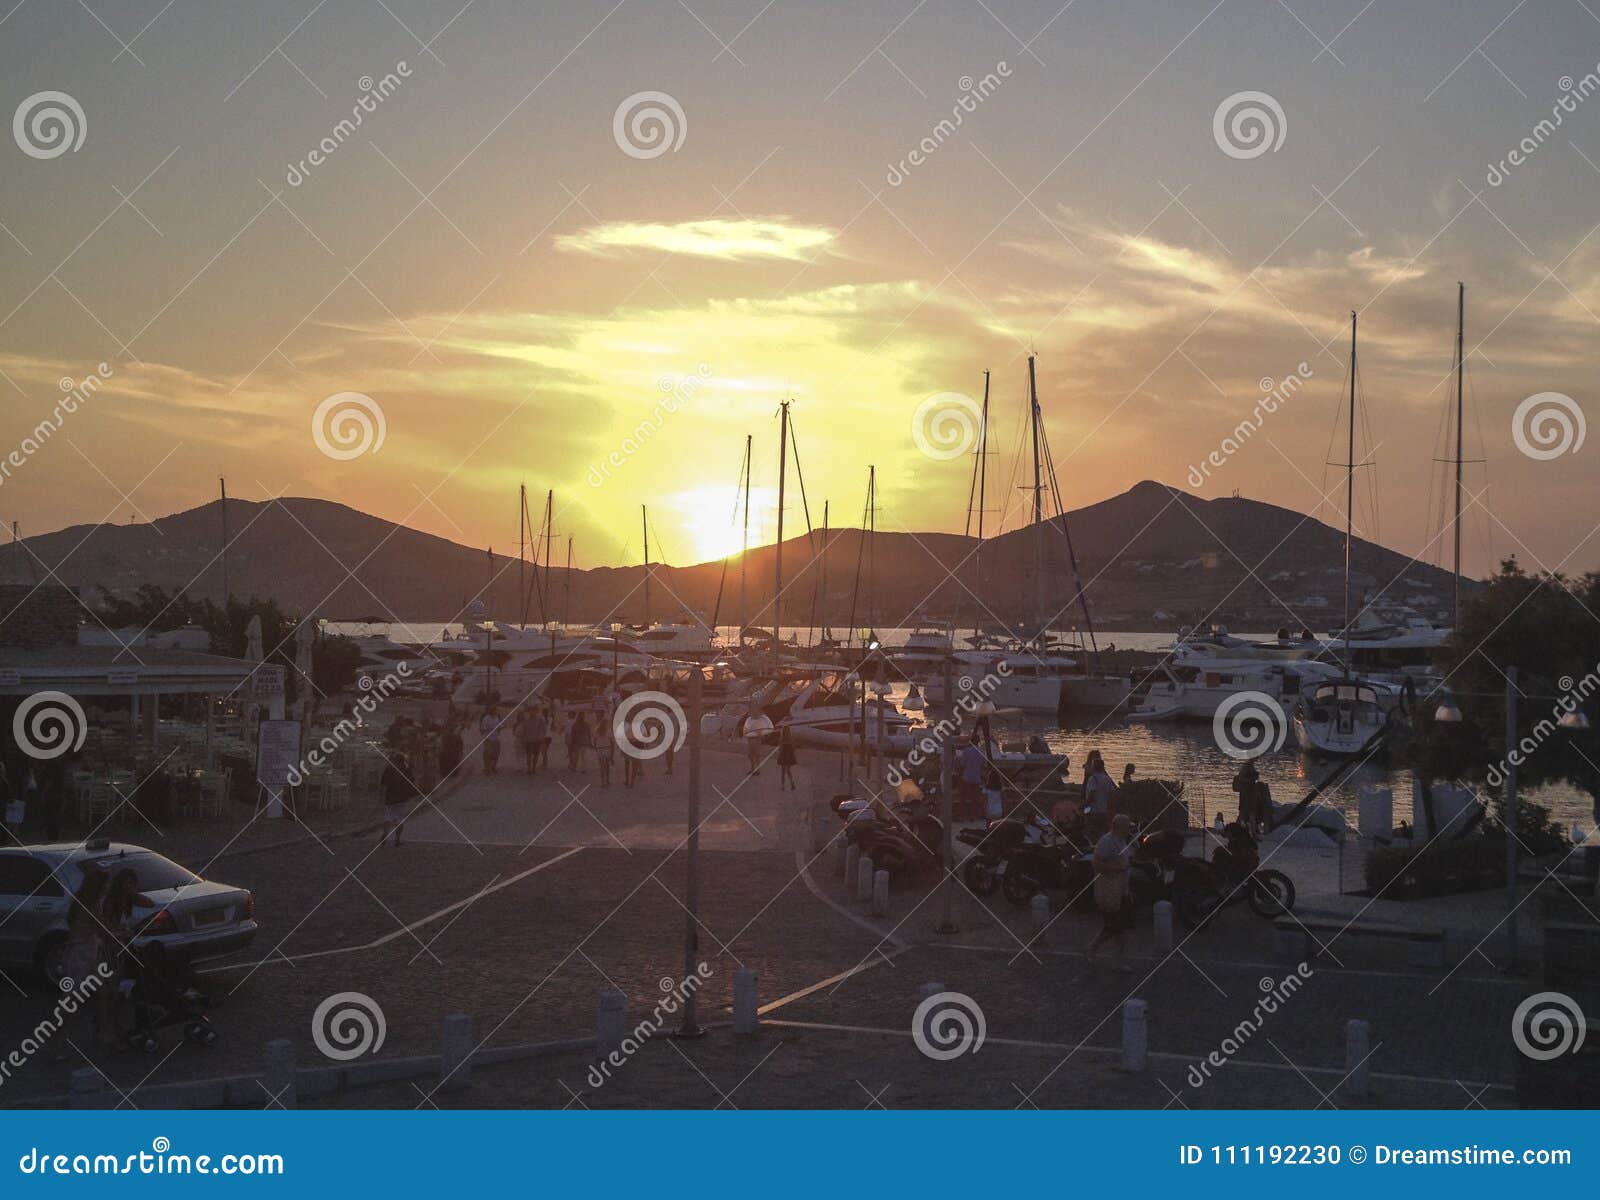 sunset port - puesta de sol en un puerto